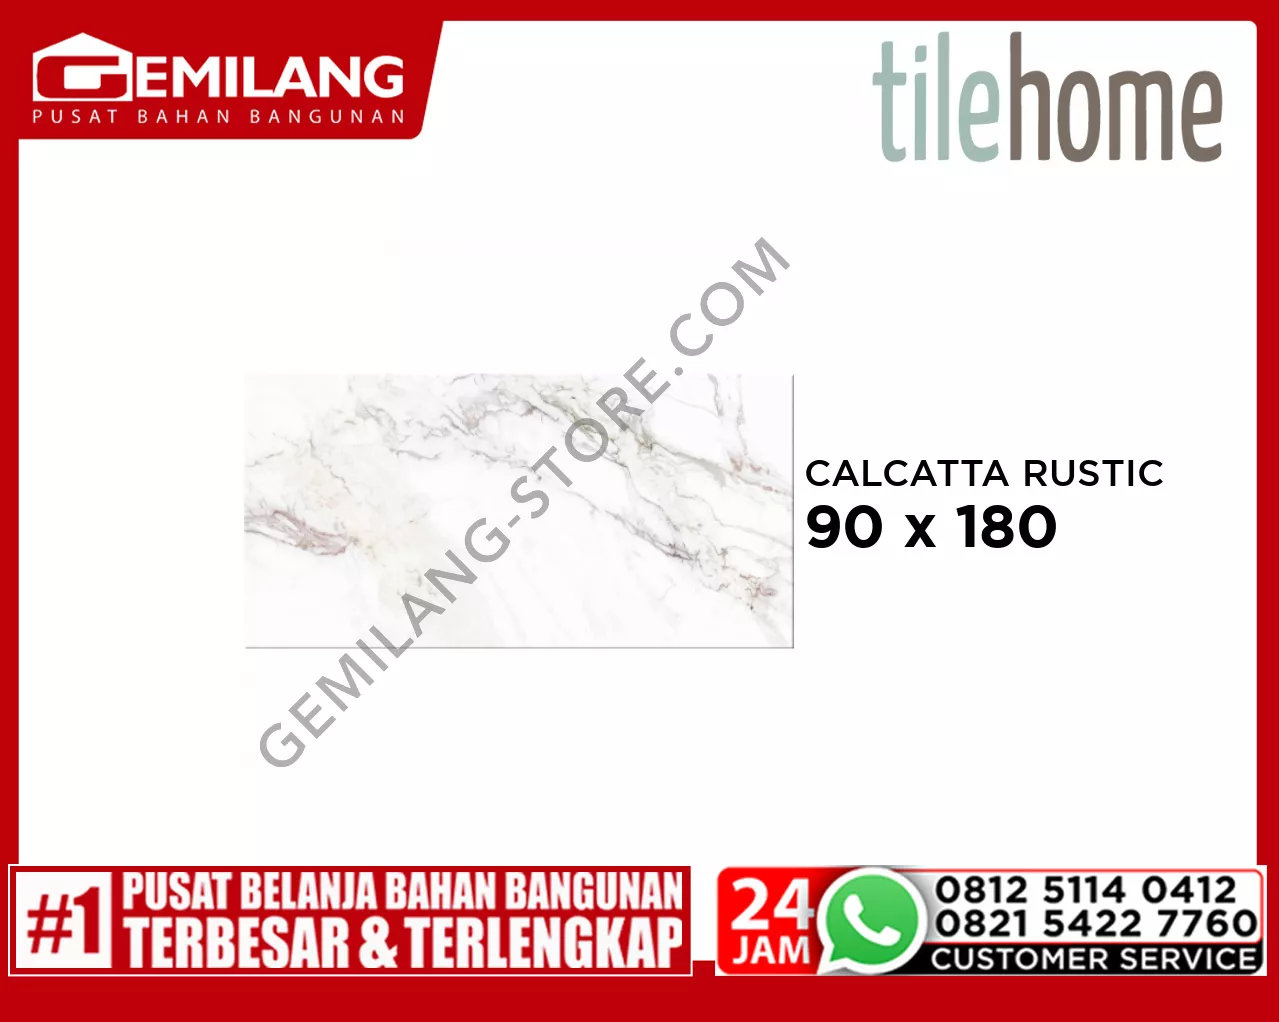 TILEHOME GRANIT CALCATTA RUSTICO RK189H201B 90 x 180